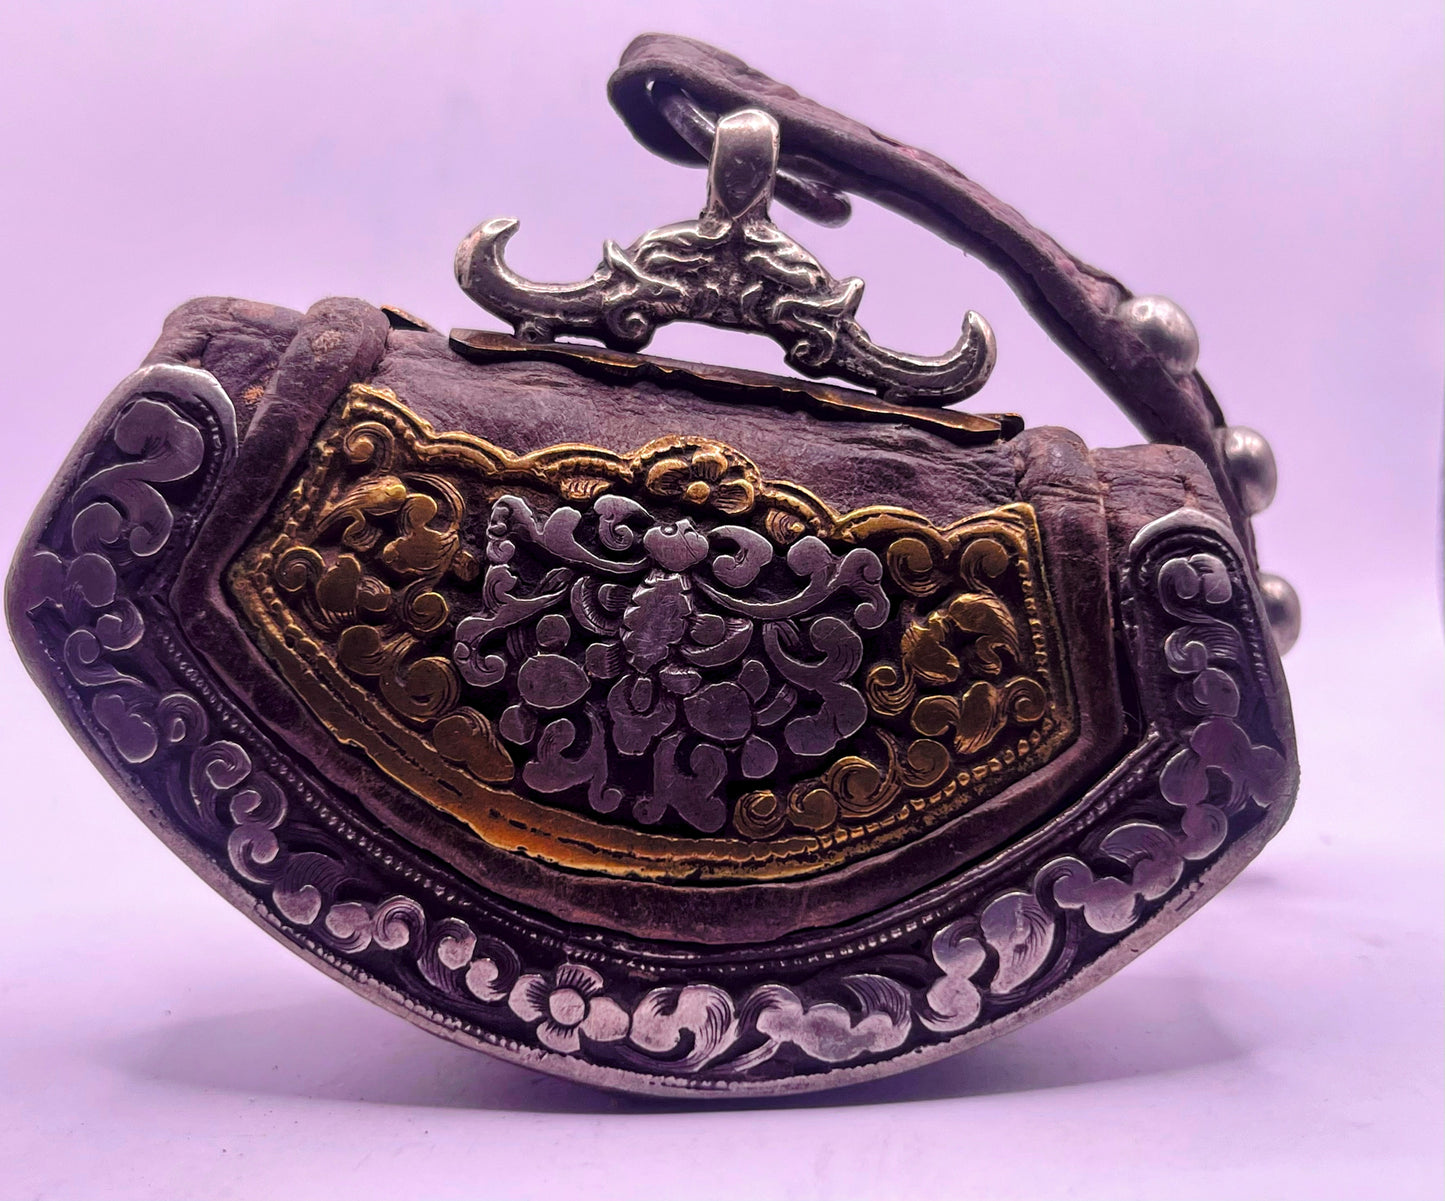 An antique Tibetan mechak purse with turquoise